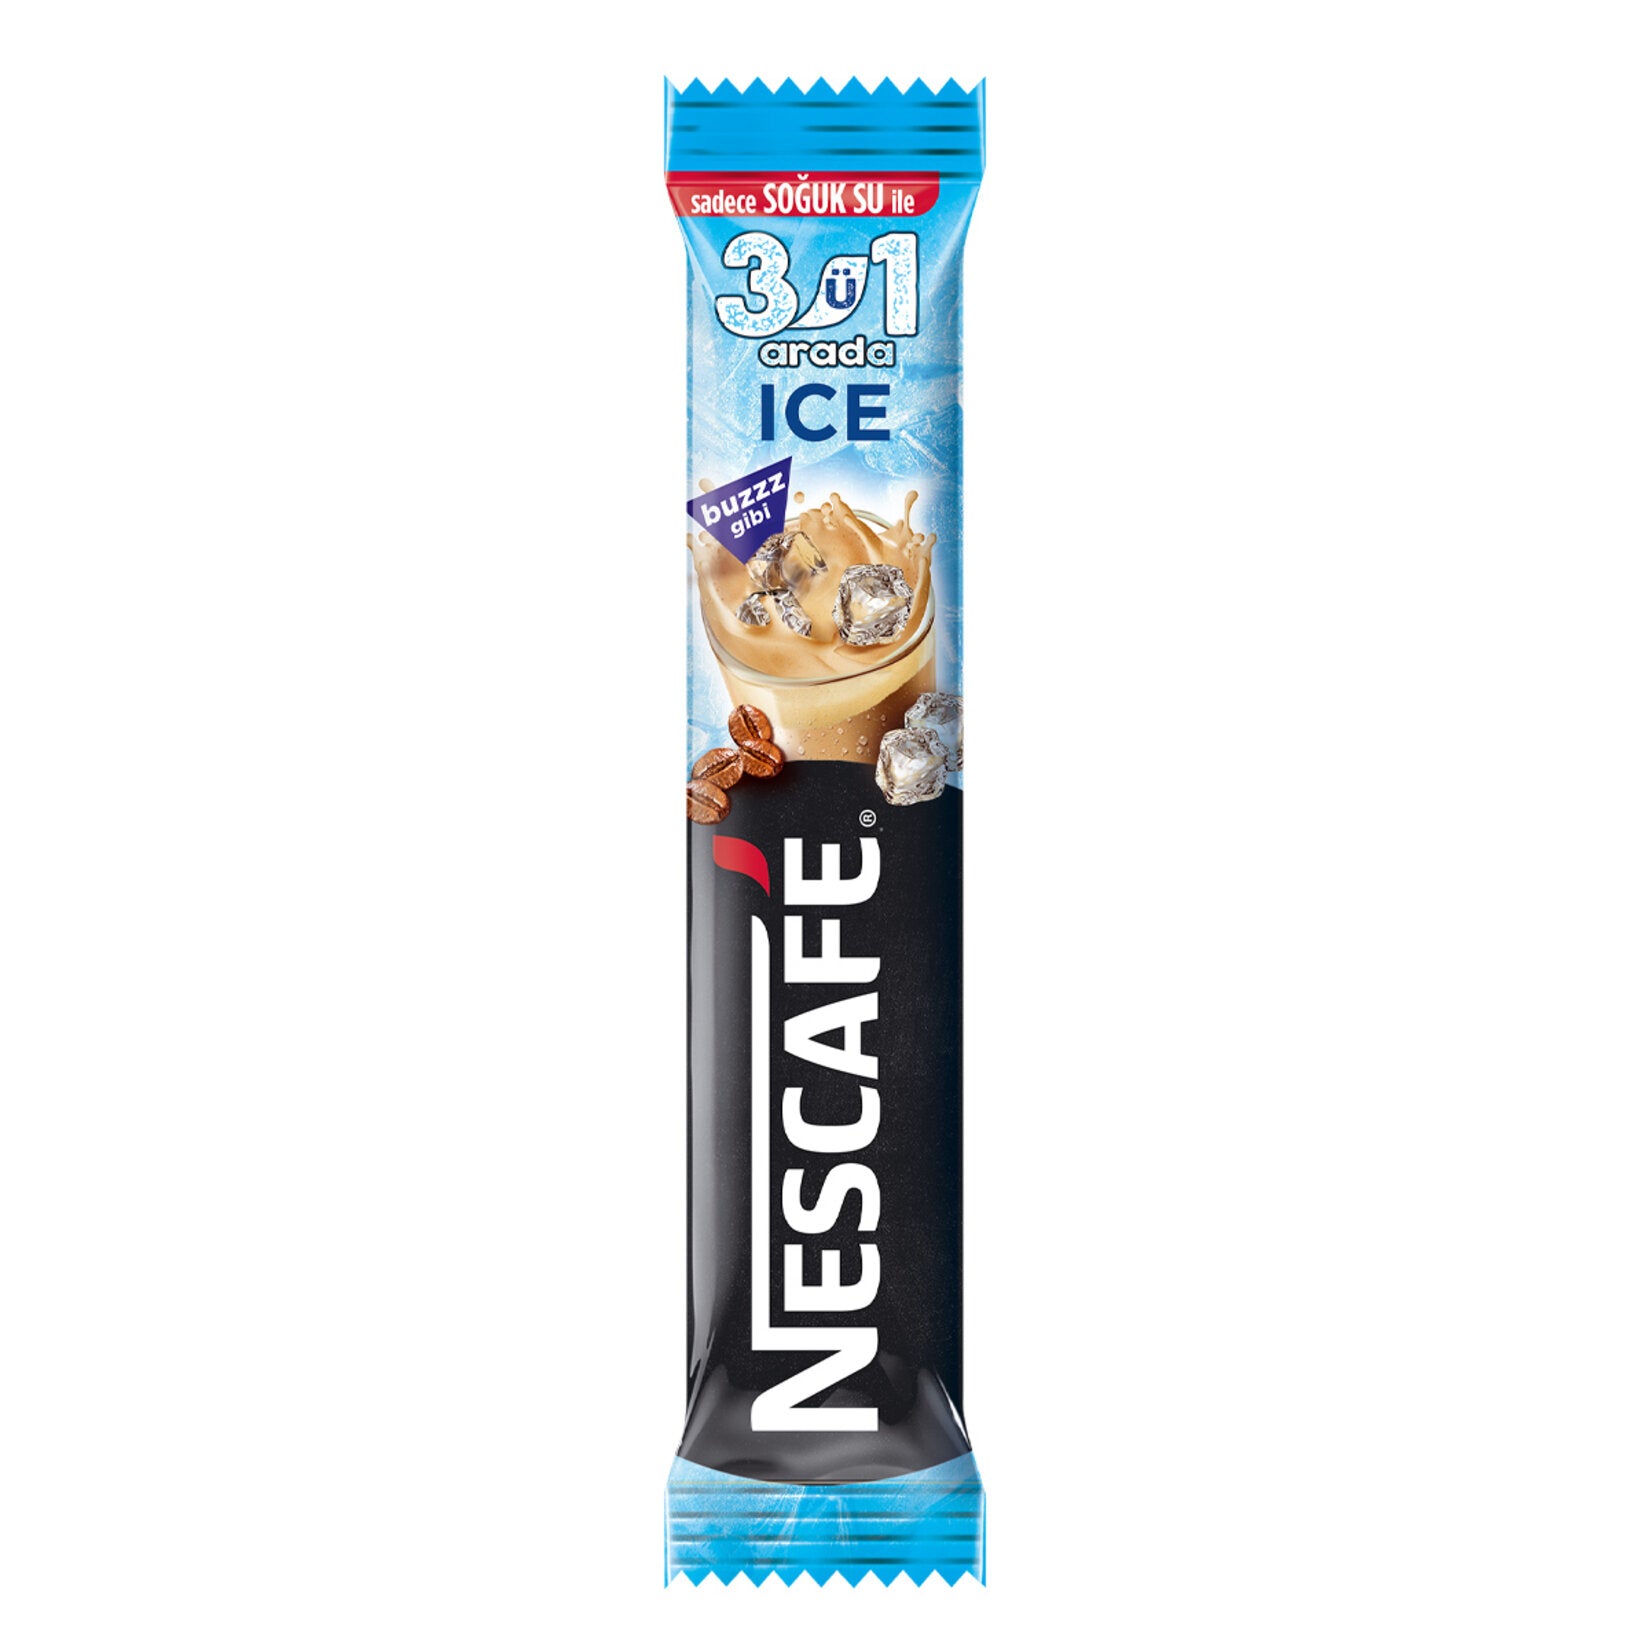 Nescafé Iced Coffee 3x3L